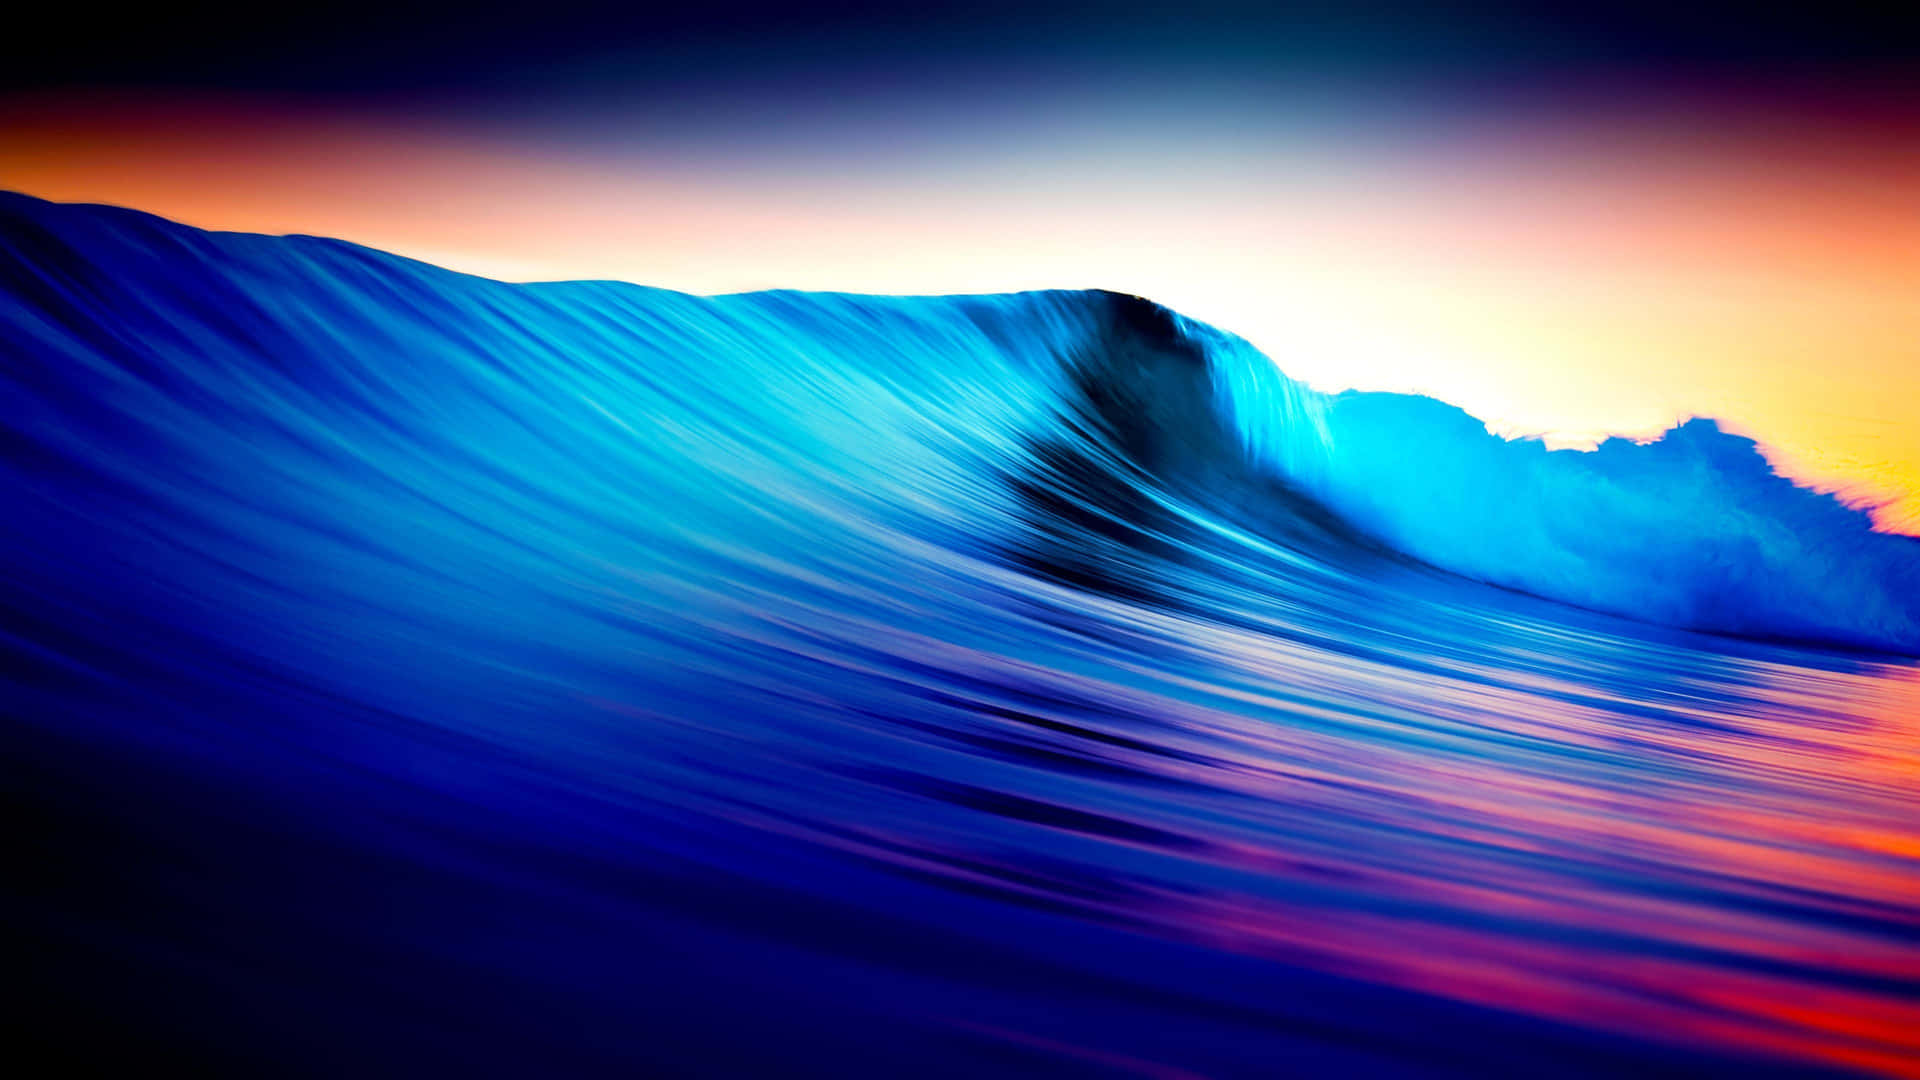 Caption: Stunning High-definition 4k Water Image Wallpaper